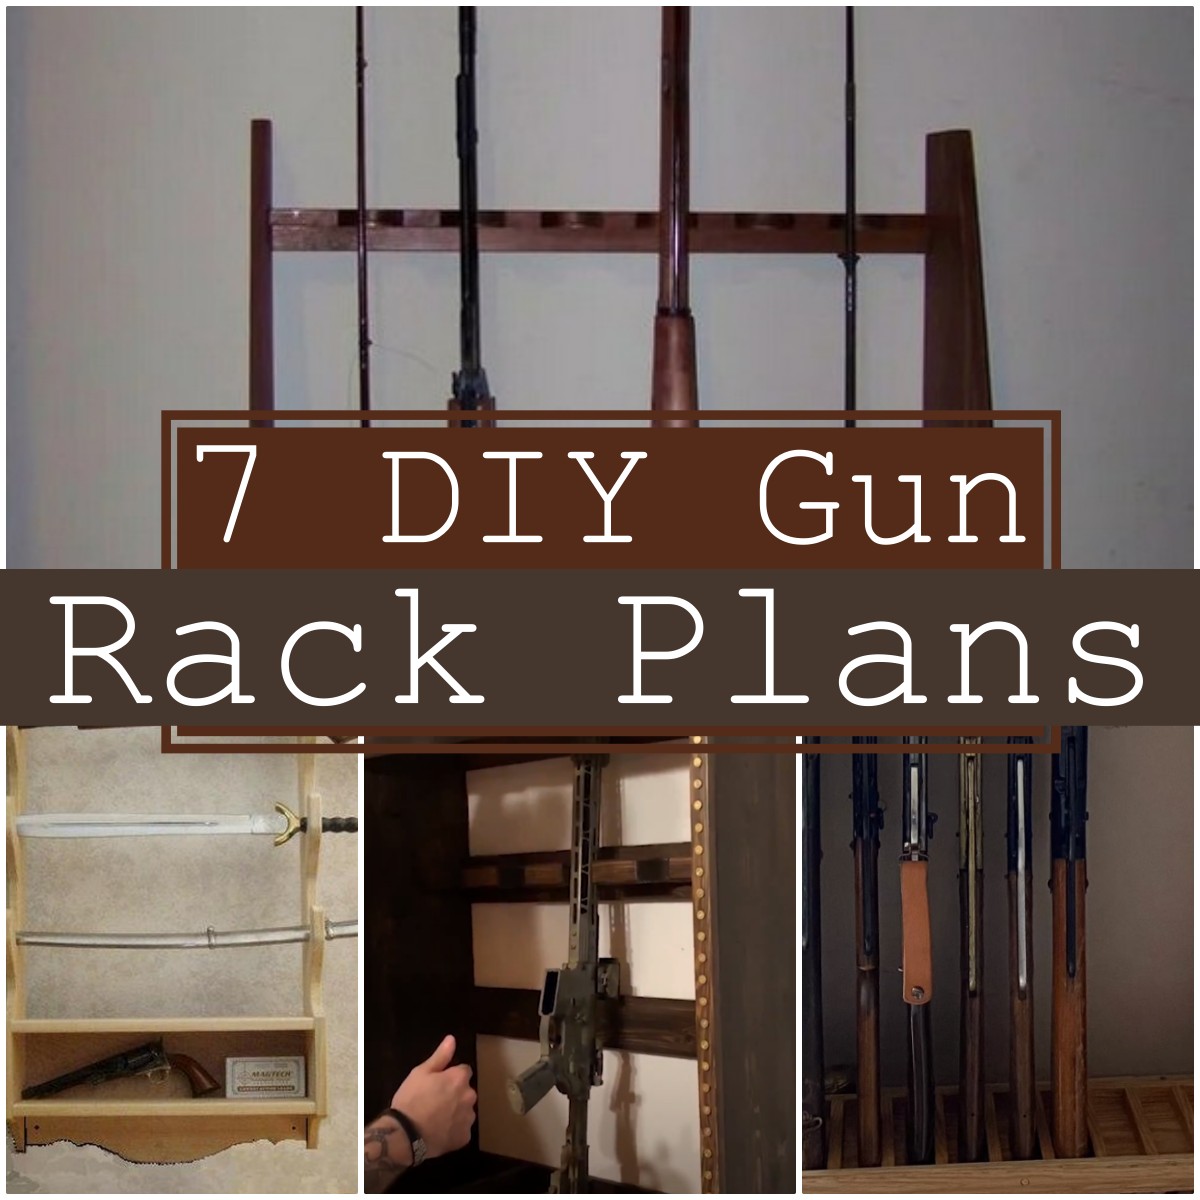 7 DIY Gun Rack Plans DIY Crafts